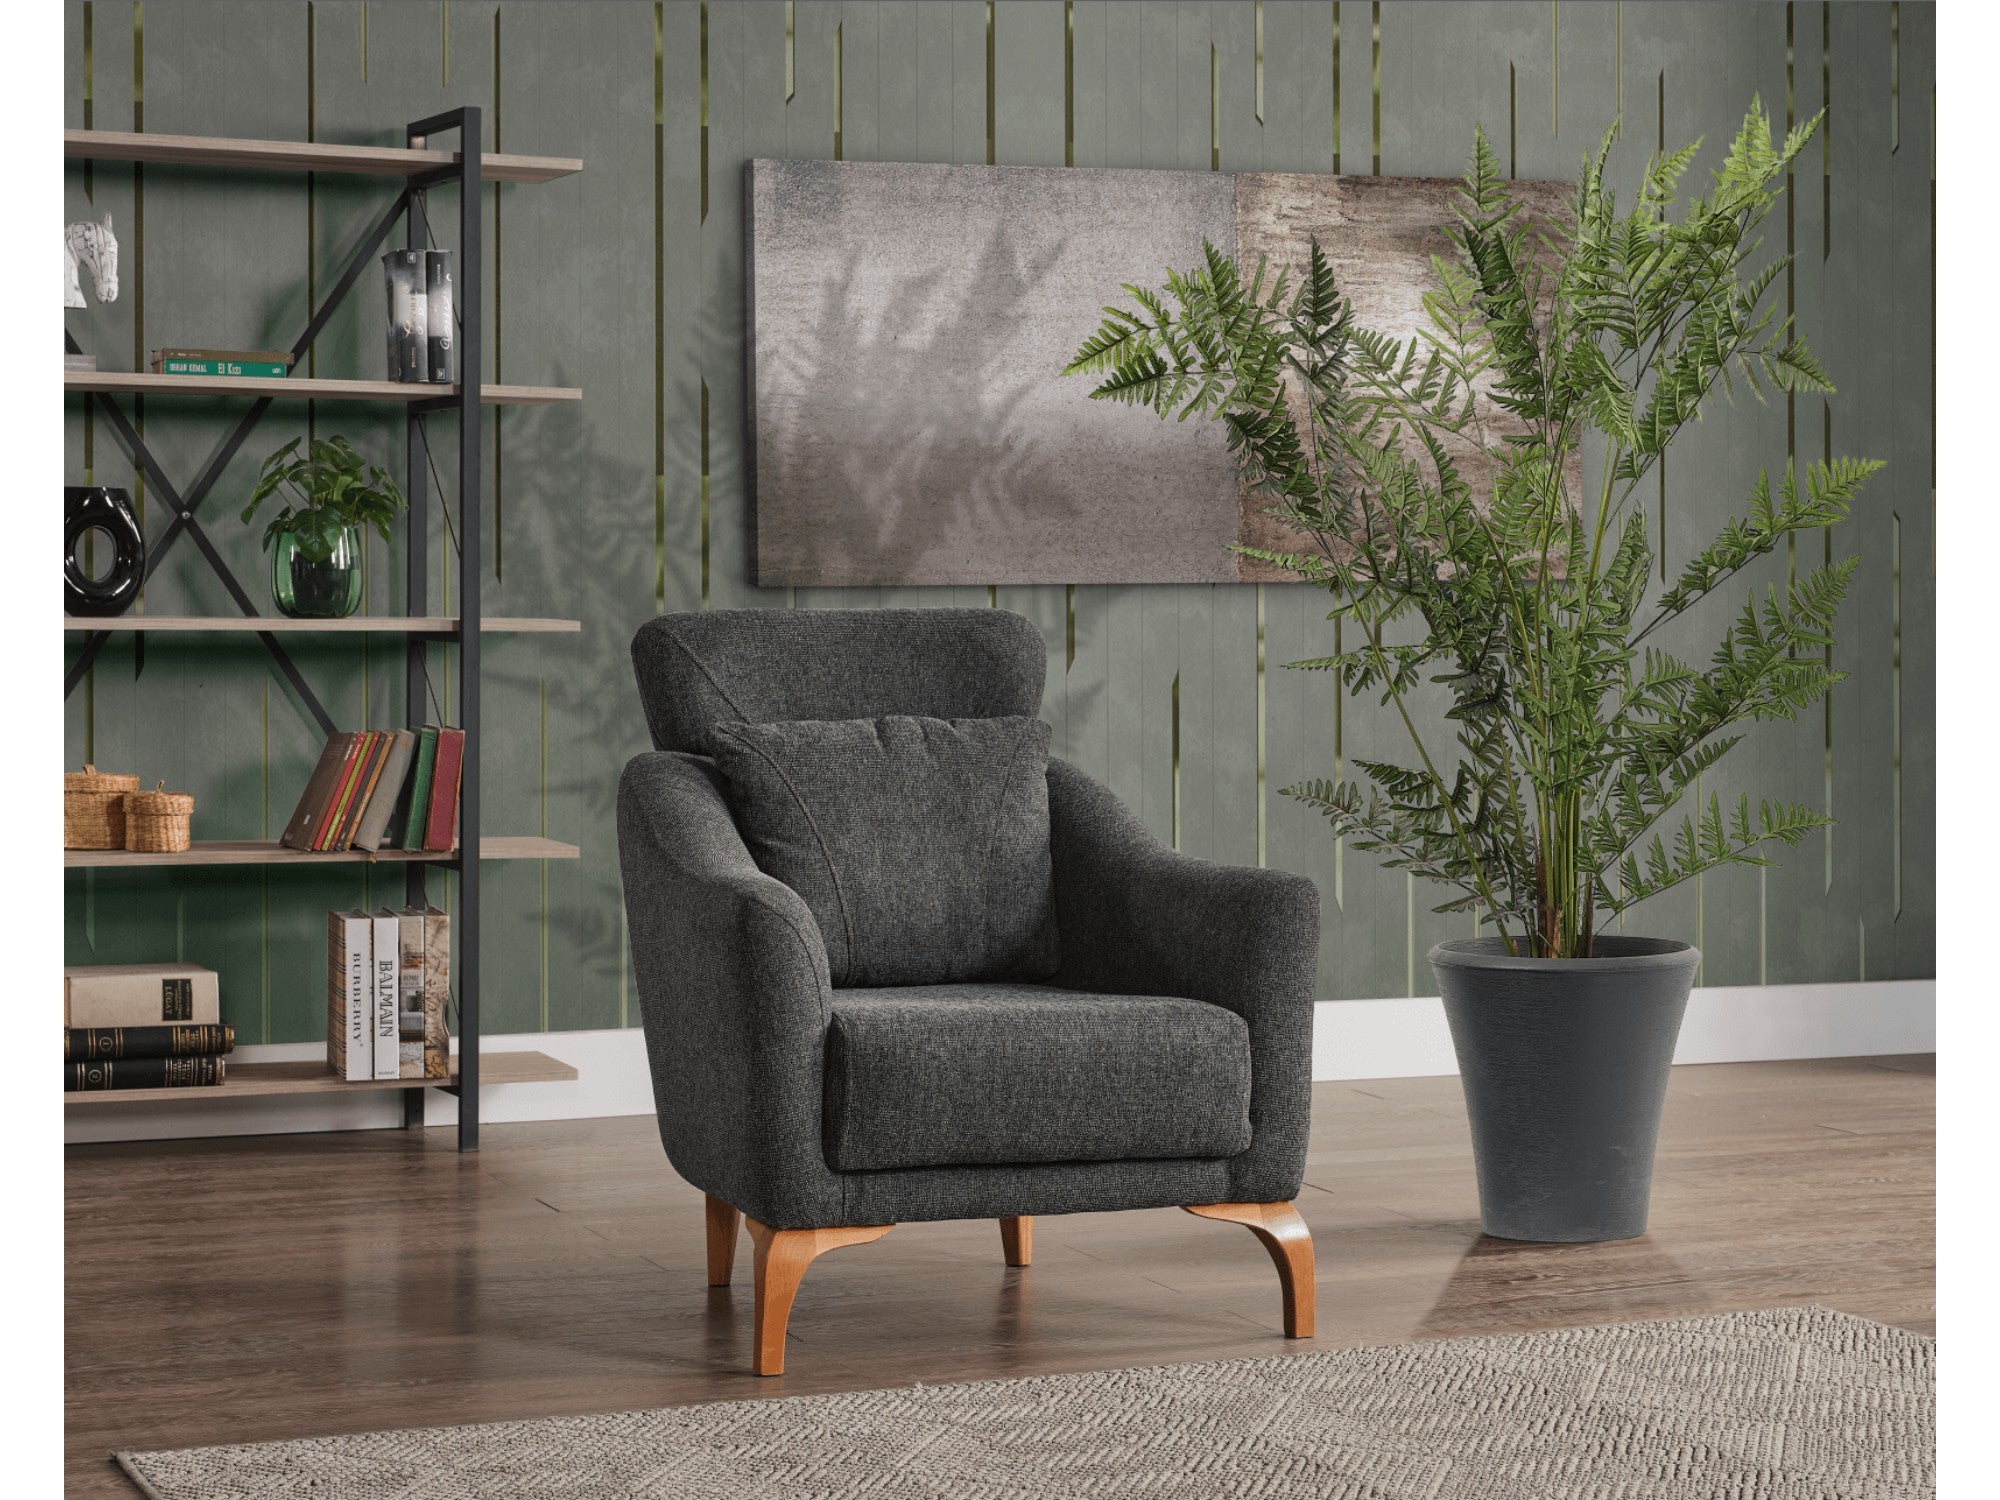 Avanos Convertible Livingroom Set (2 Sofa & 2 Chair)